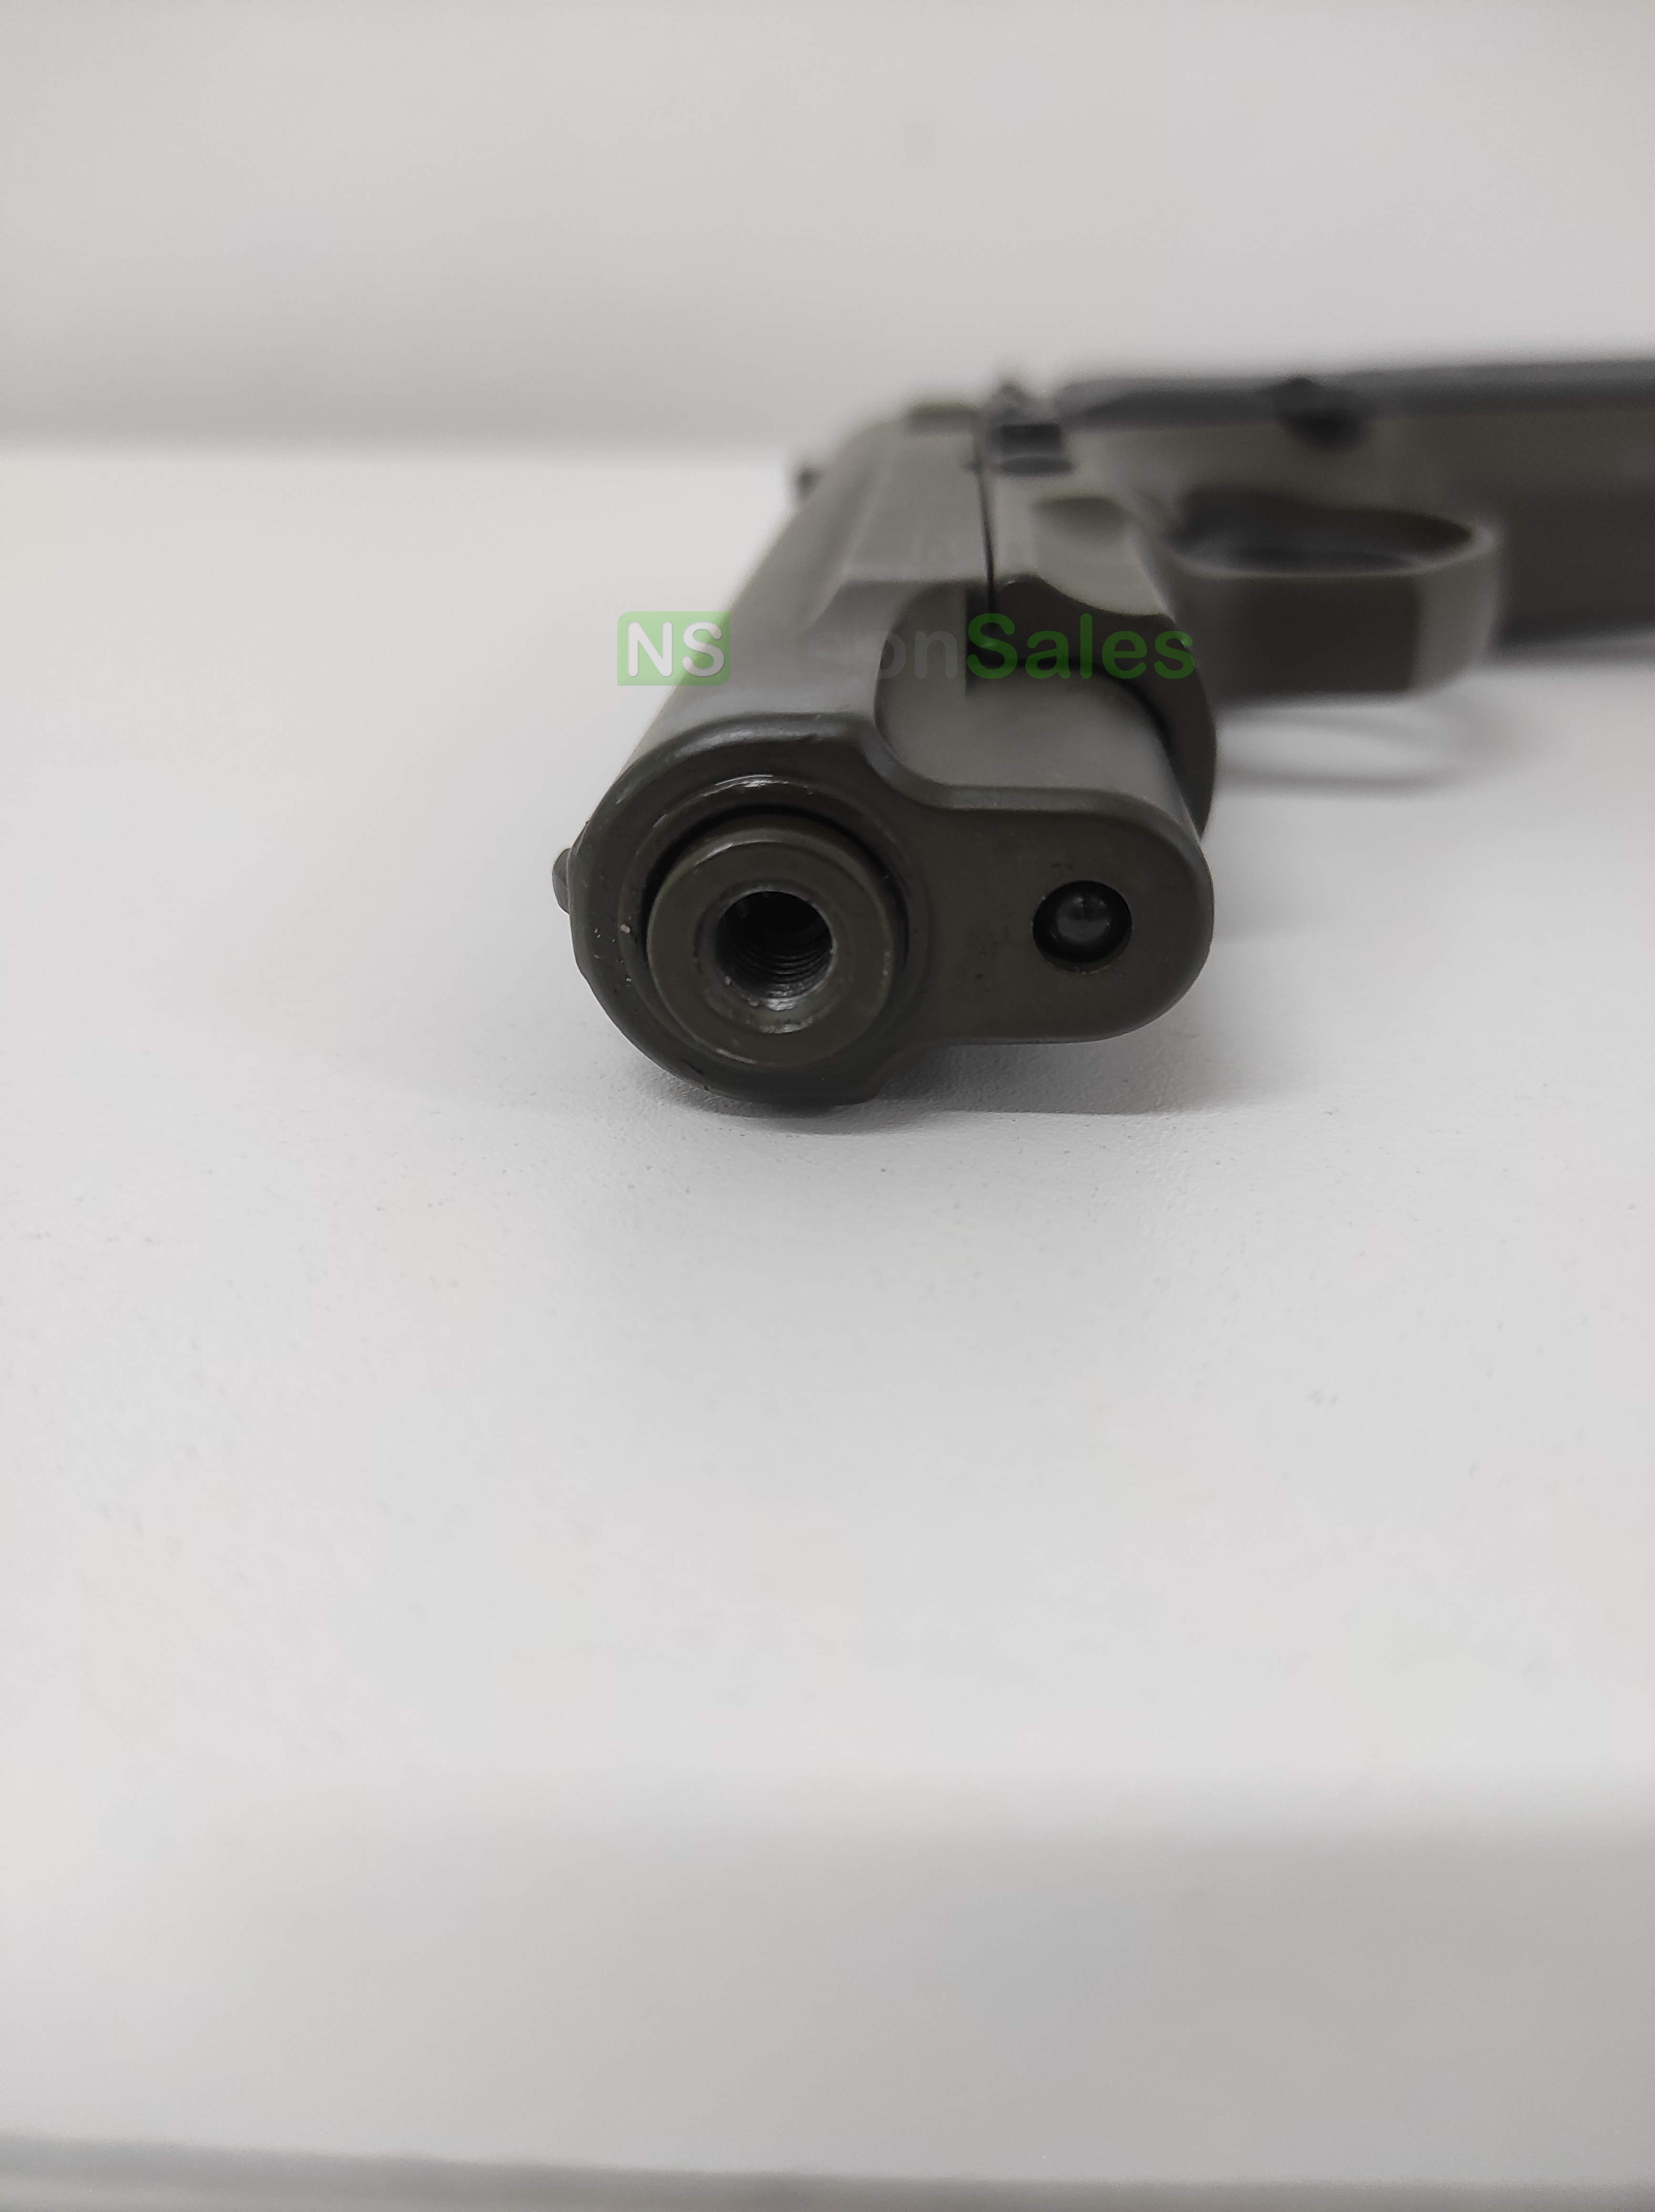 BAREDDA S56 BLANK GUN - OLIVE DRAB